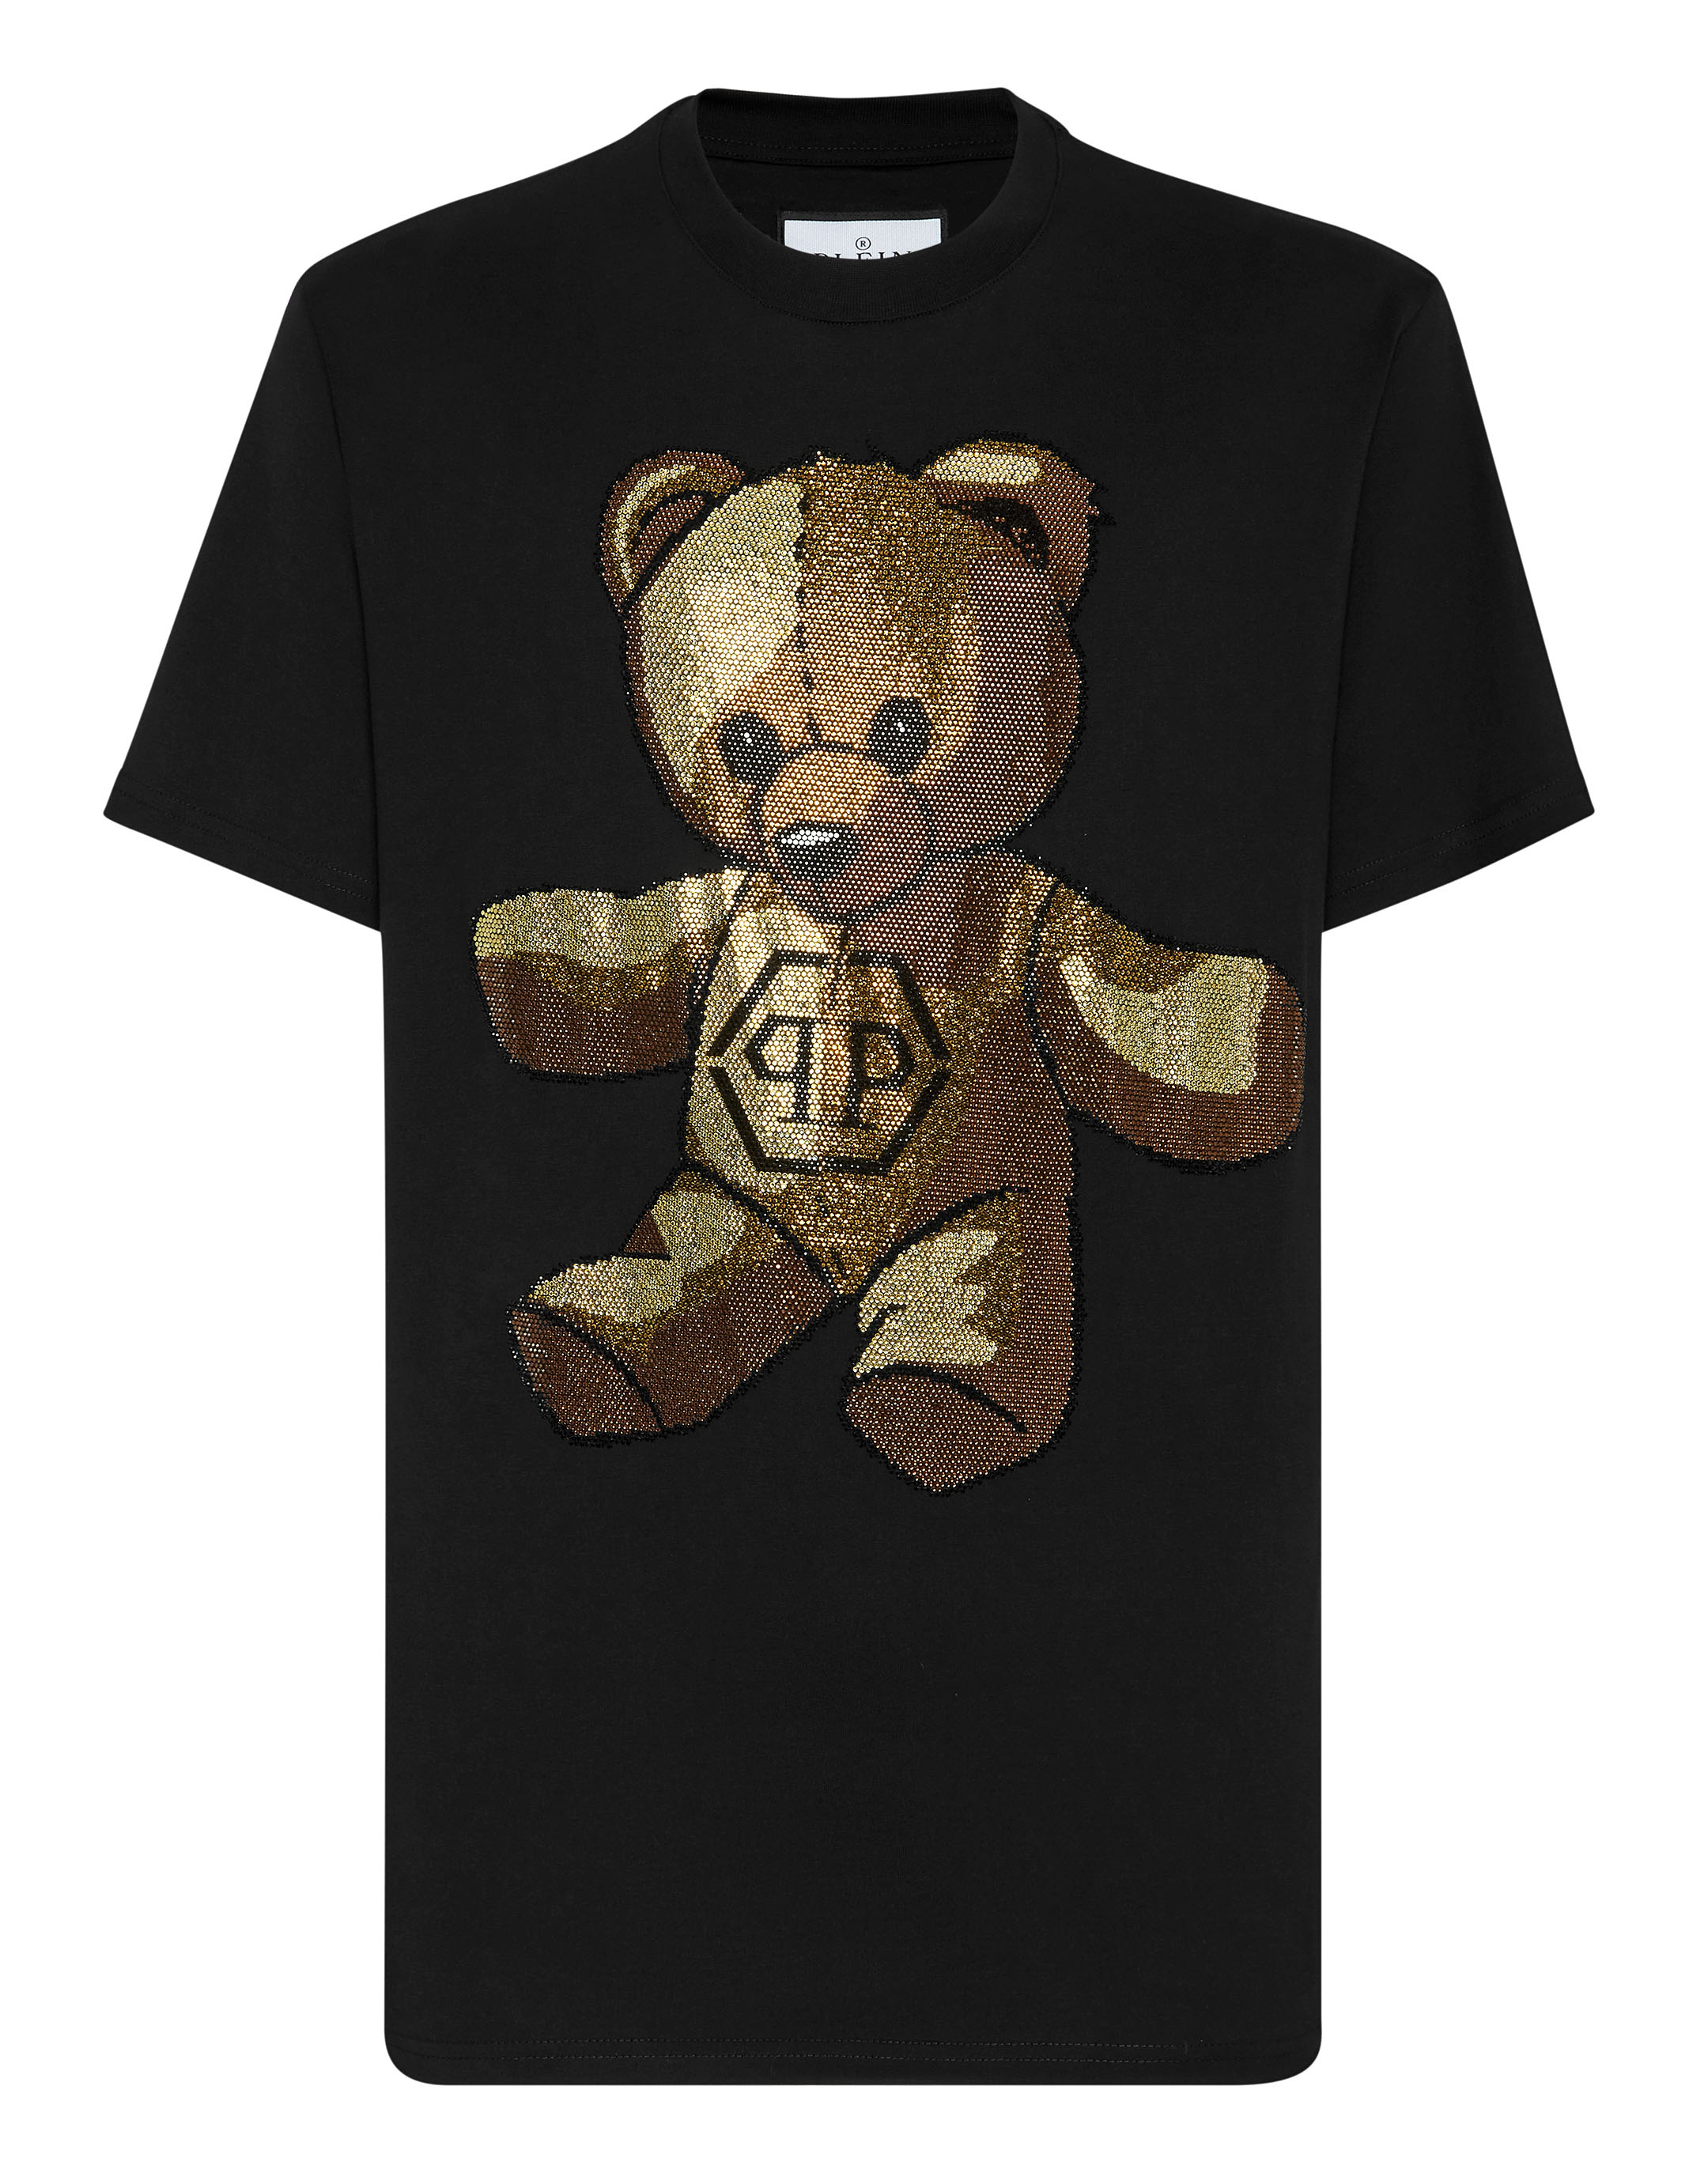 NEW FASHION] Louis Vuitton Bear Black Luxury Brand T-Shirt Outfit For Men  Women